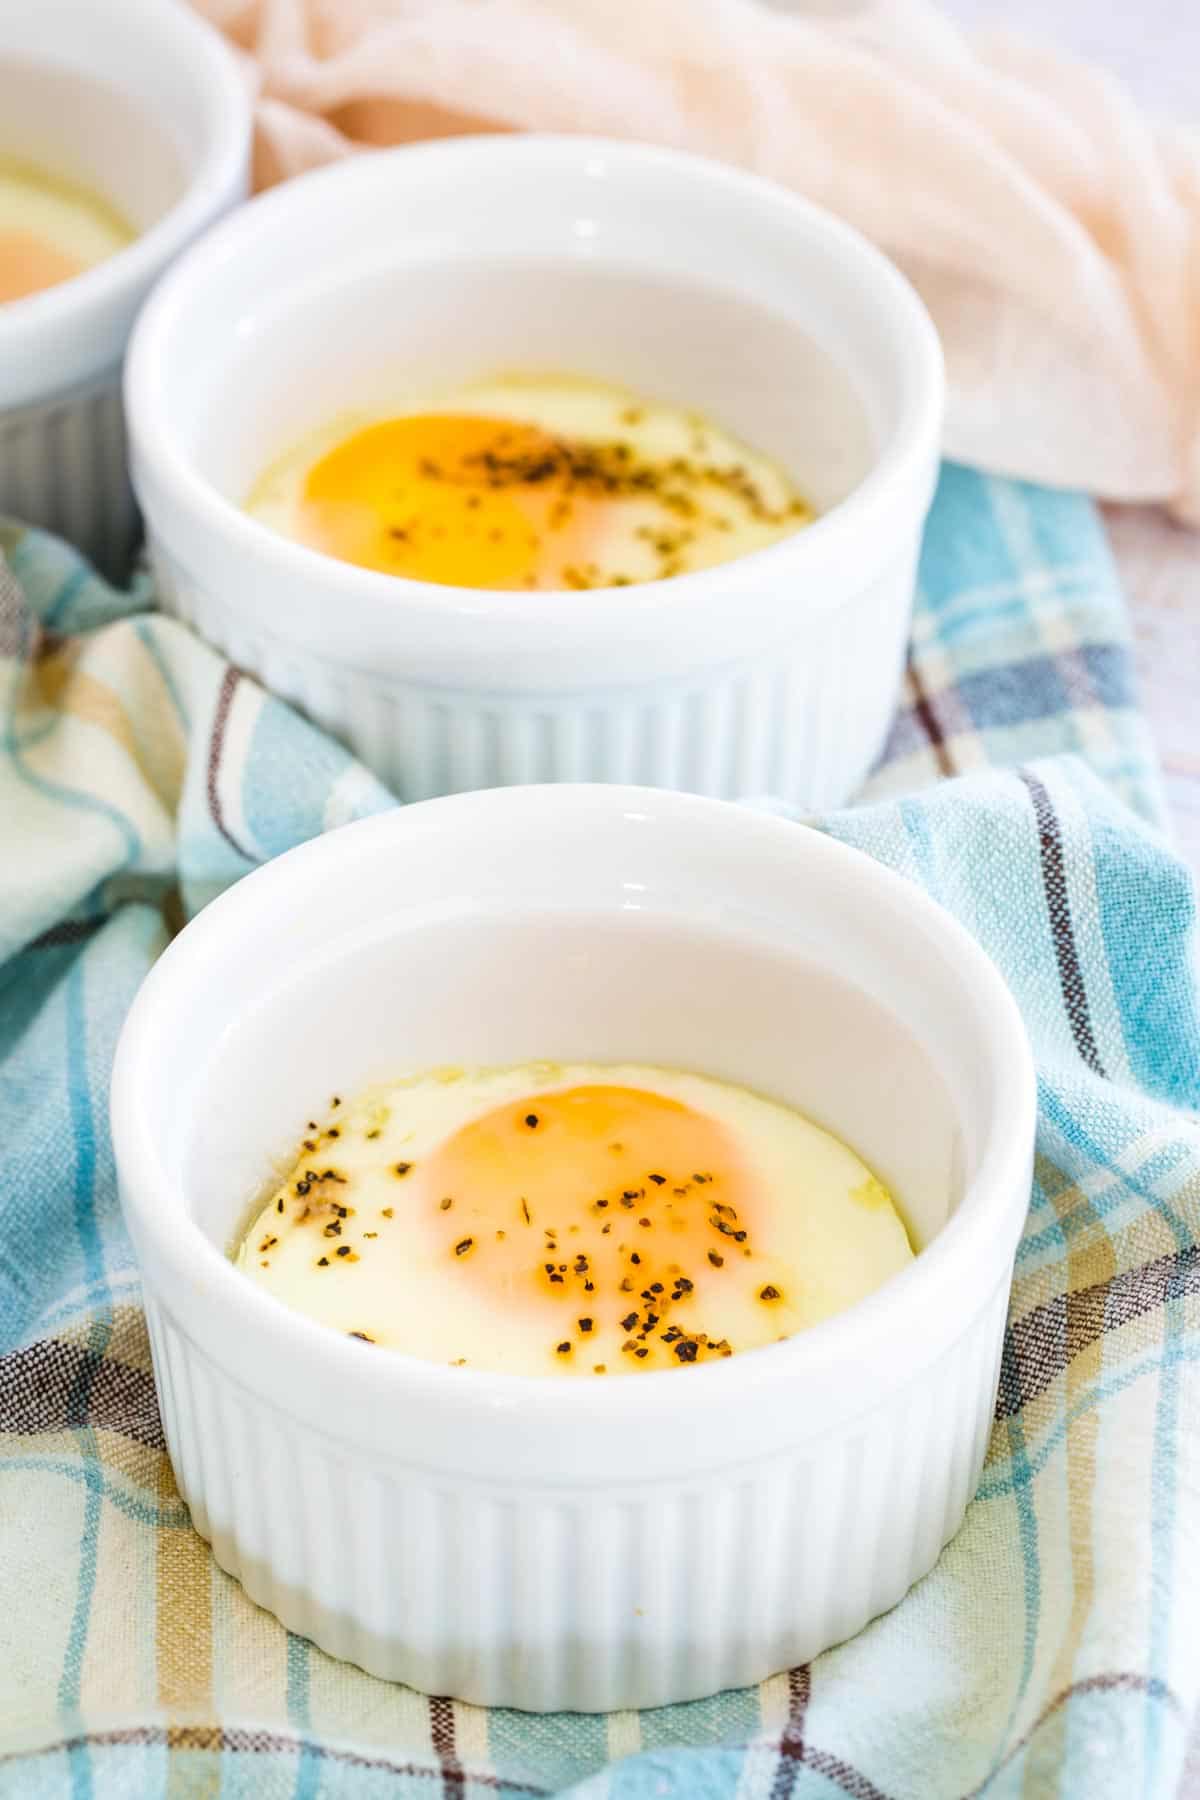 Two baked eggs seasoned with salt and pepper inside white ramekins.